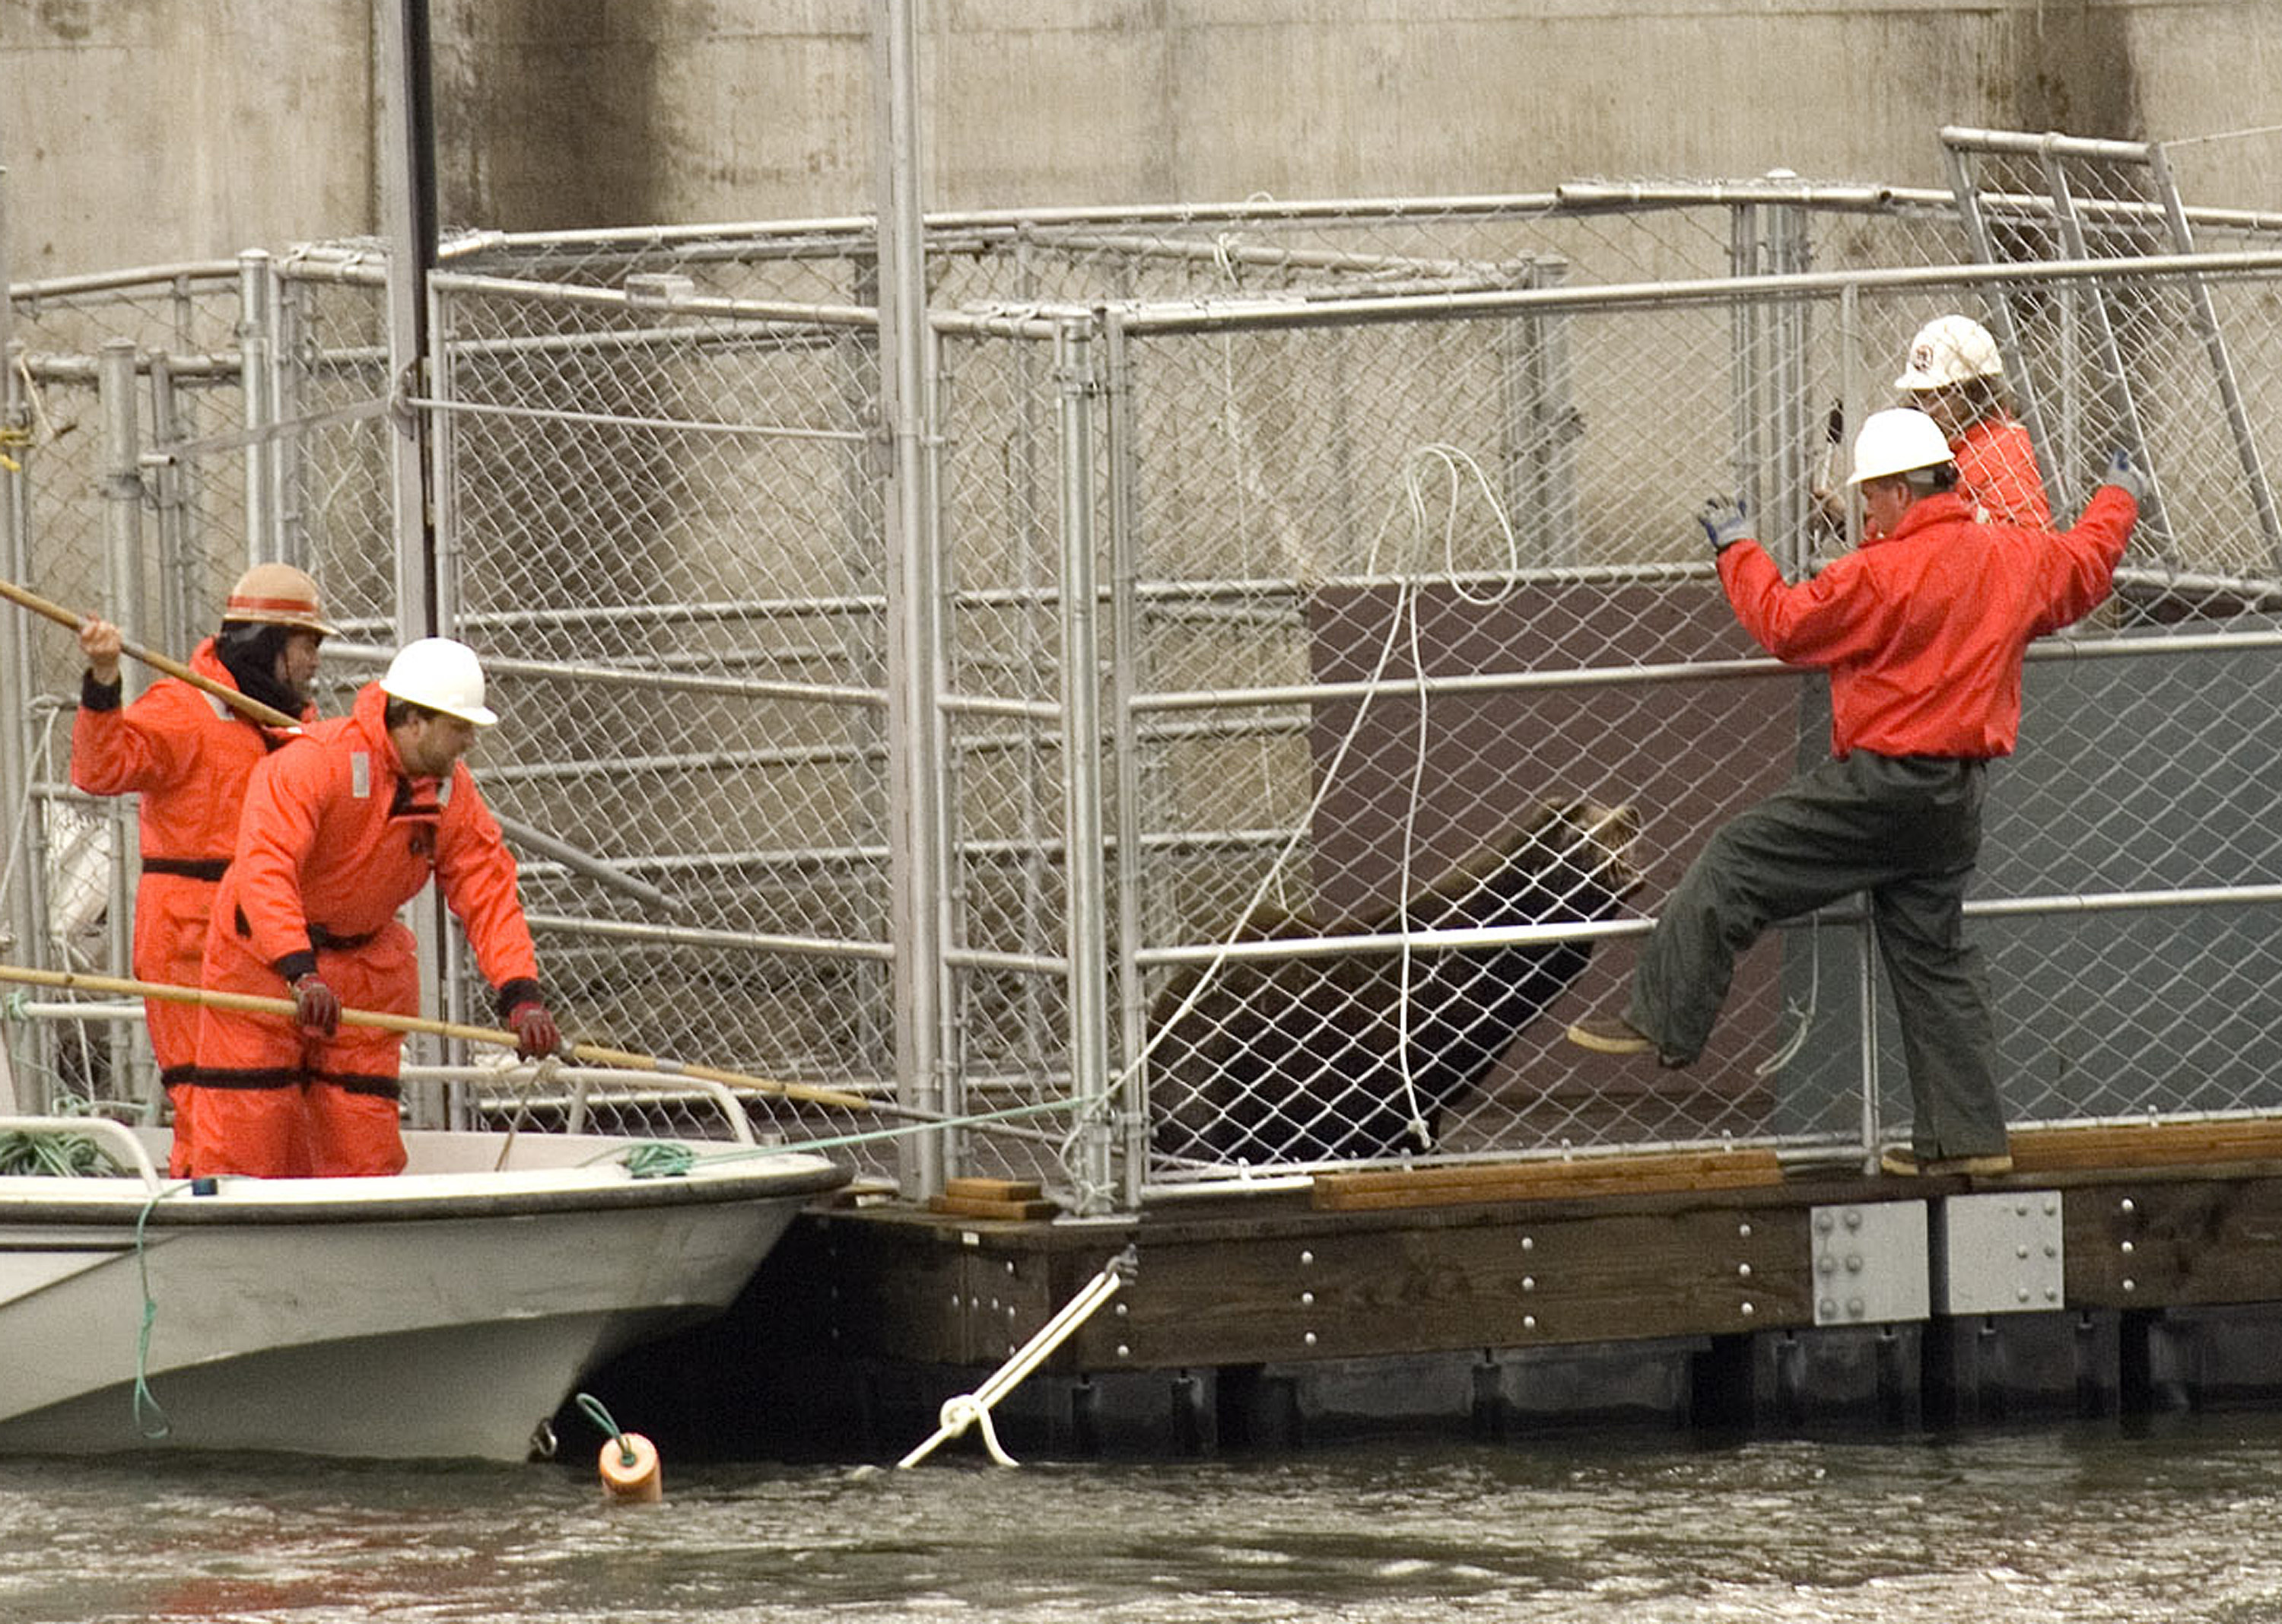 Congress OKs bill to allow killing sea lions to help salmon